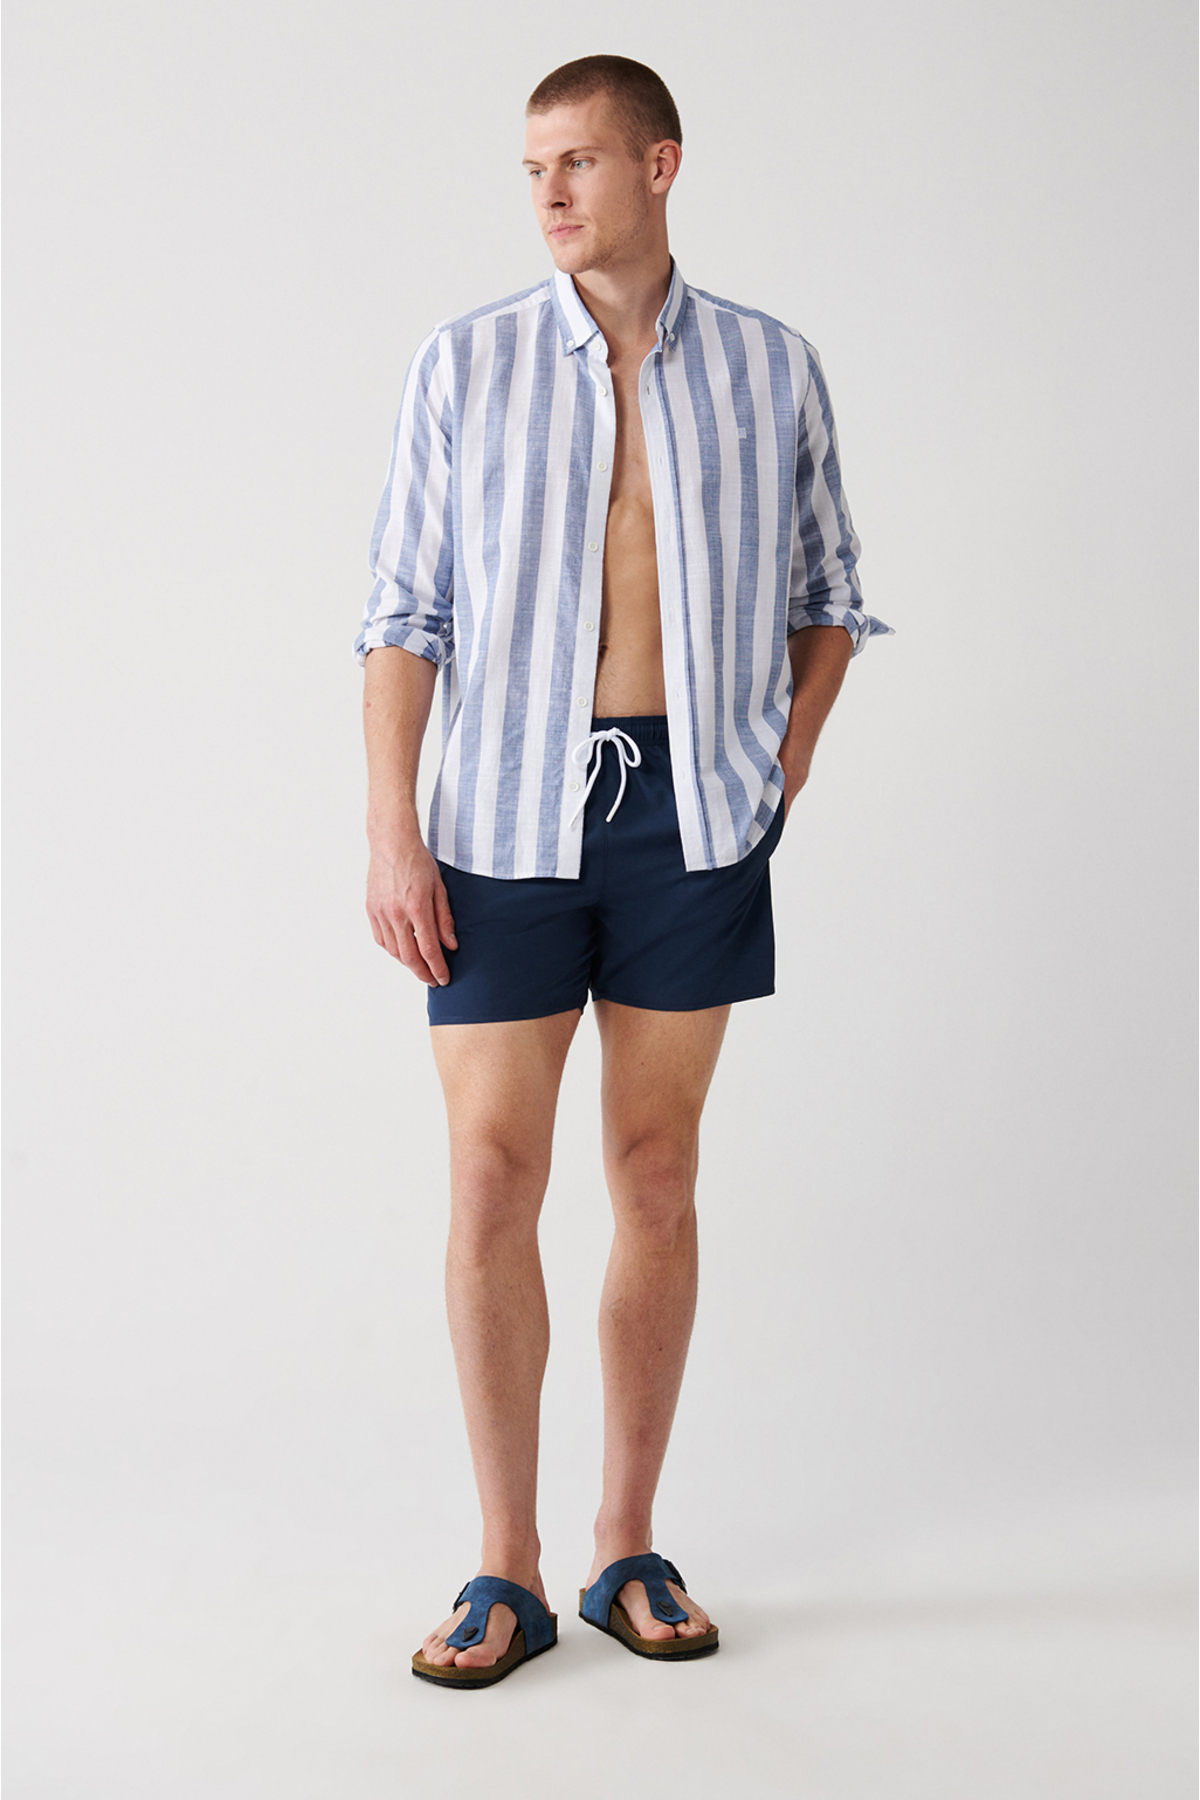 Levně Avva Men's Indigo Quick-Drying Printed Swimwear in a Standard Size Marine Shorts